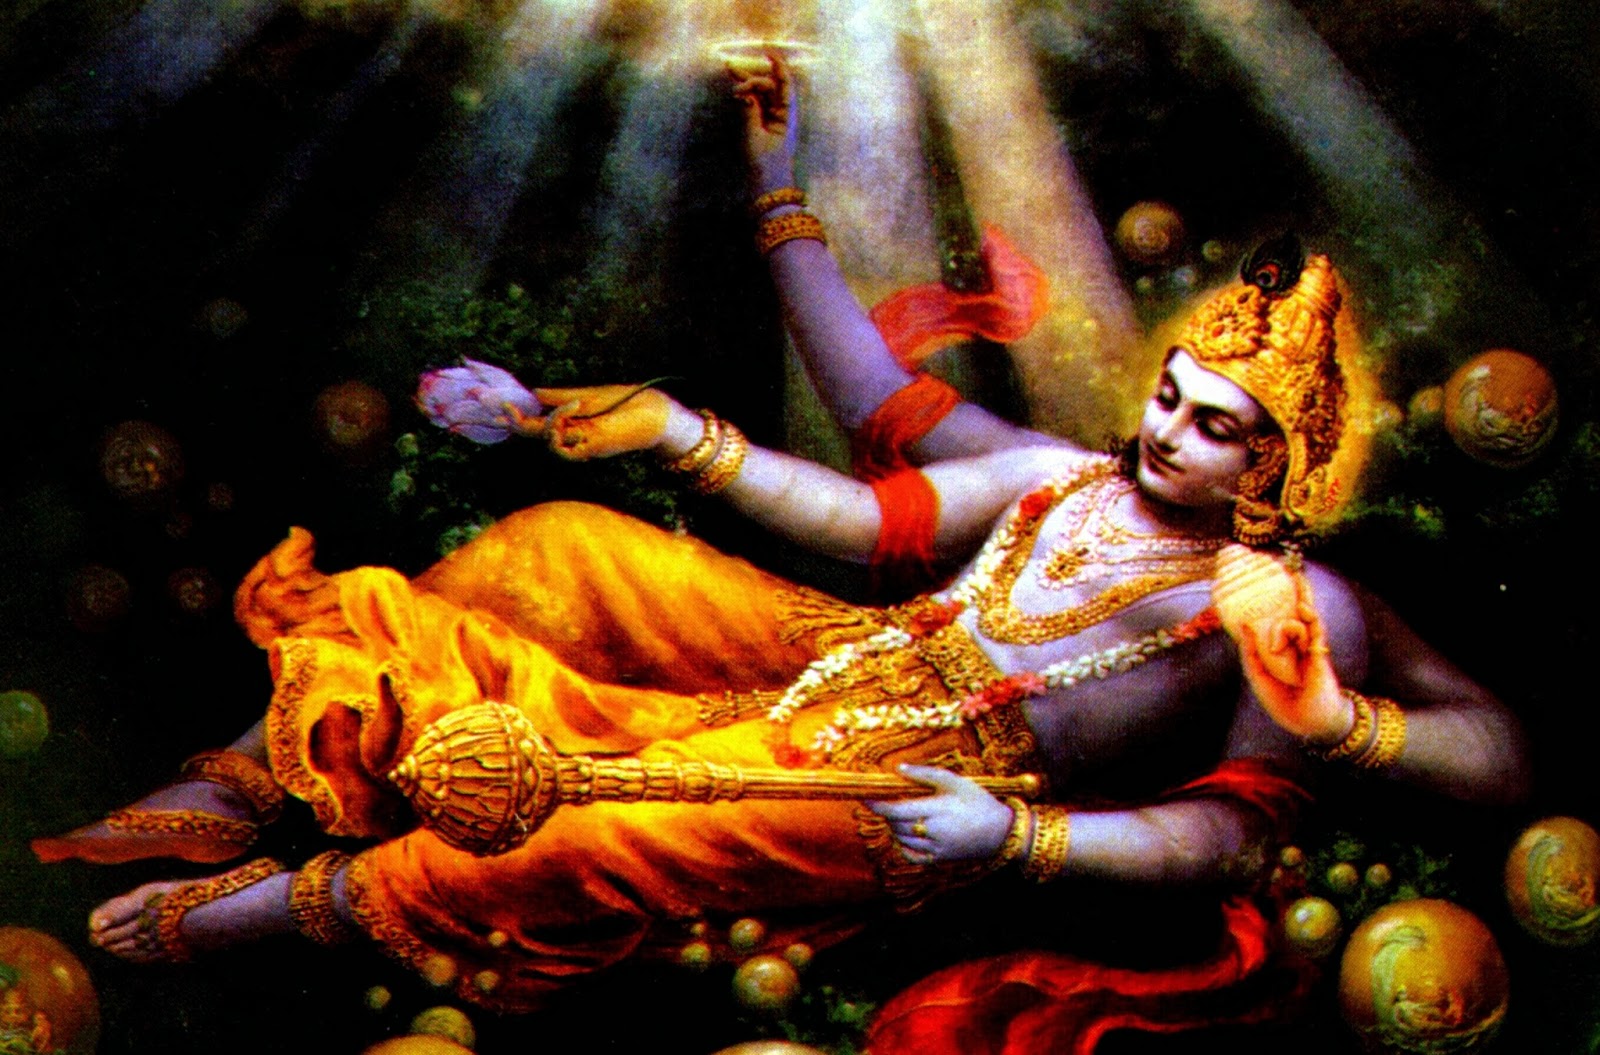 sri-krishna-alien-civilisation-arjuna-atma-nirvana-9